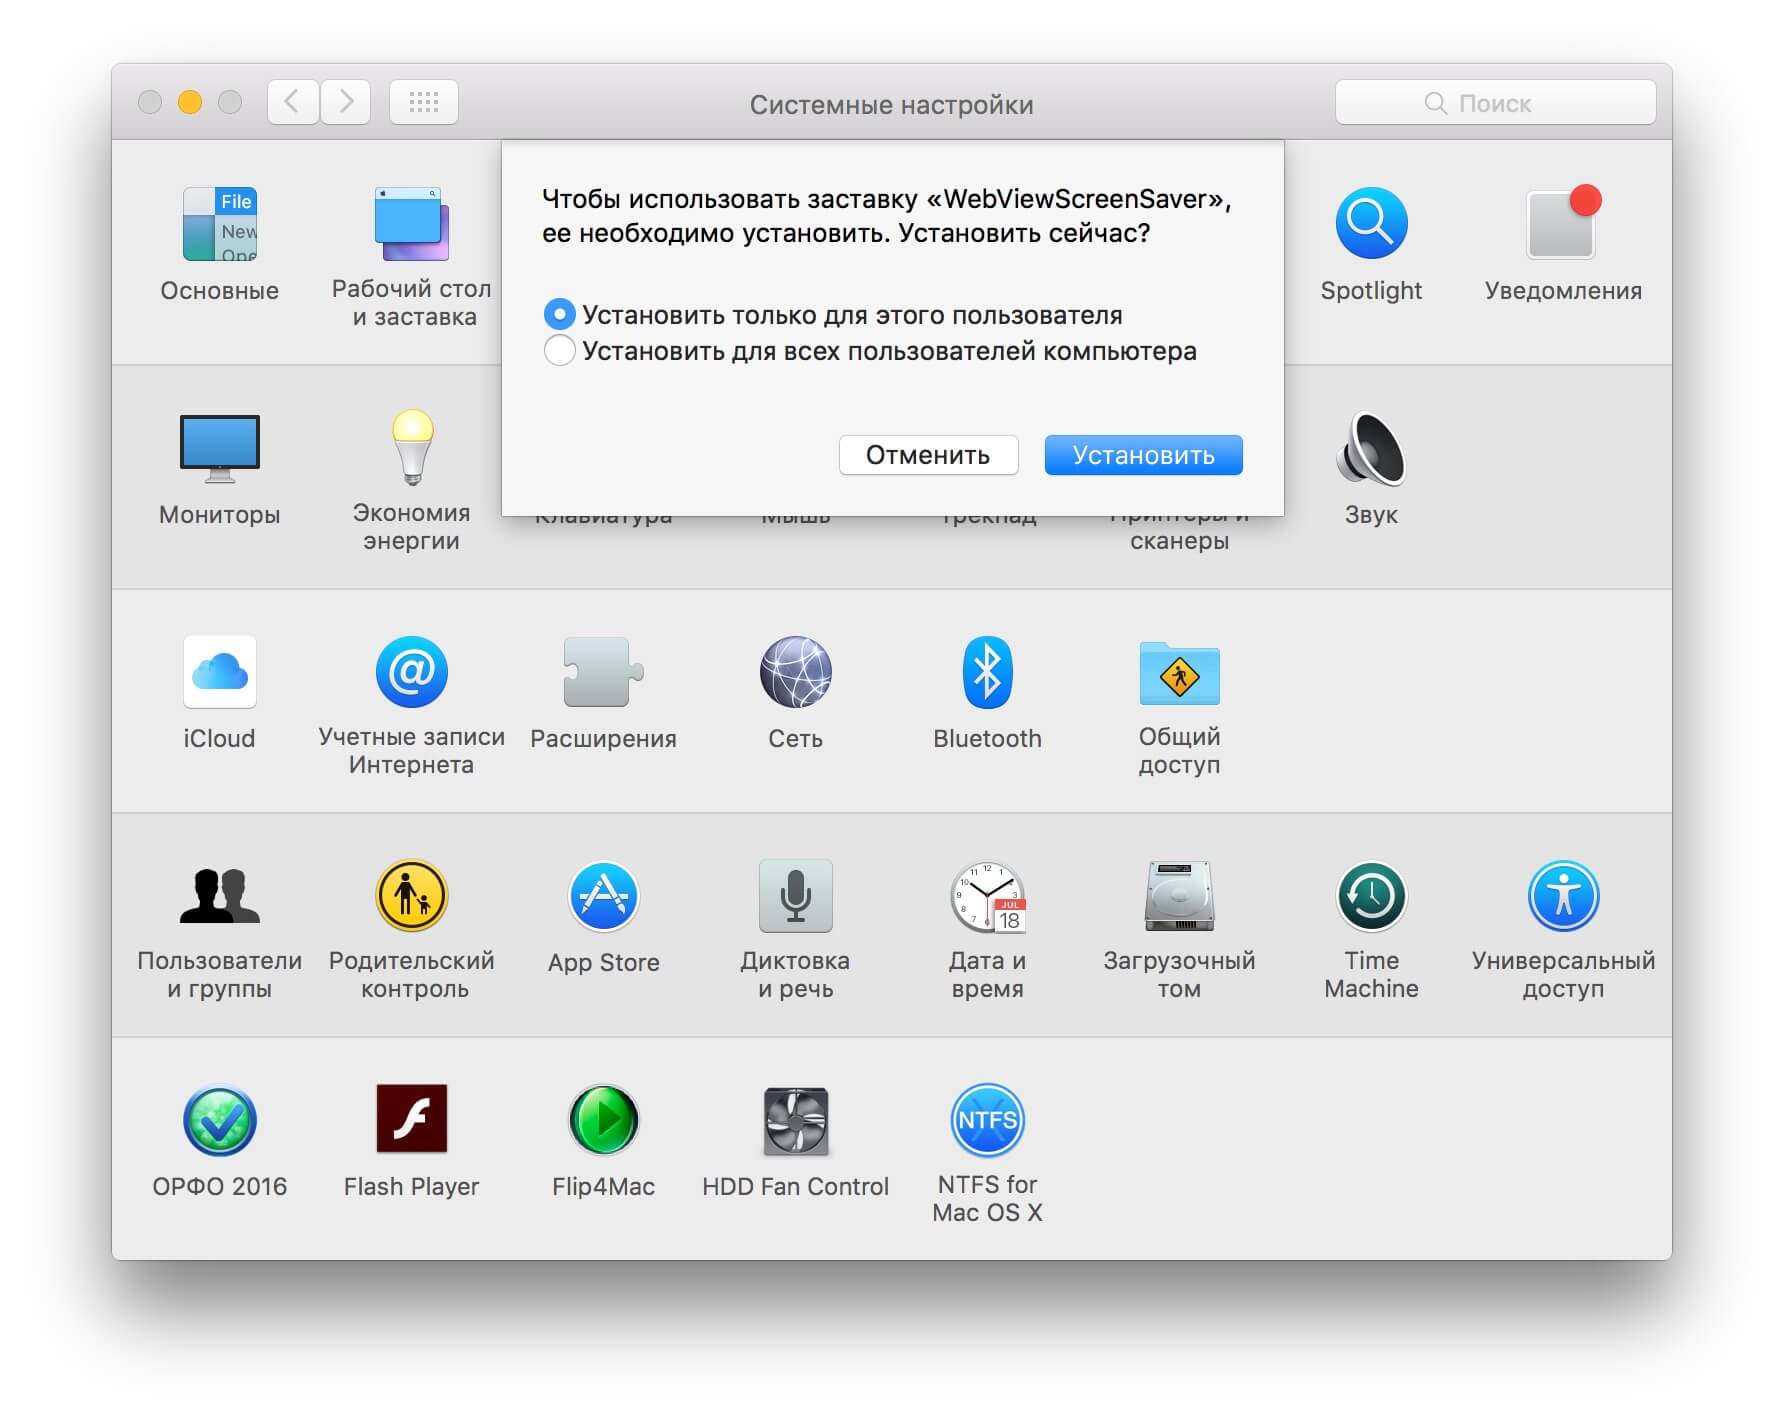 PreviSat 6.0.0.15 instal the new for apple